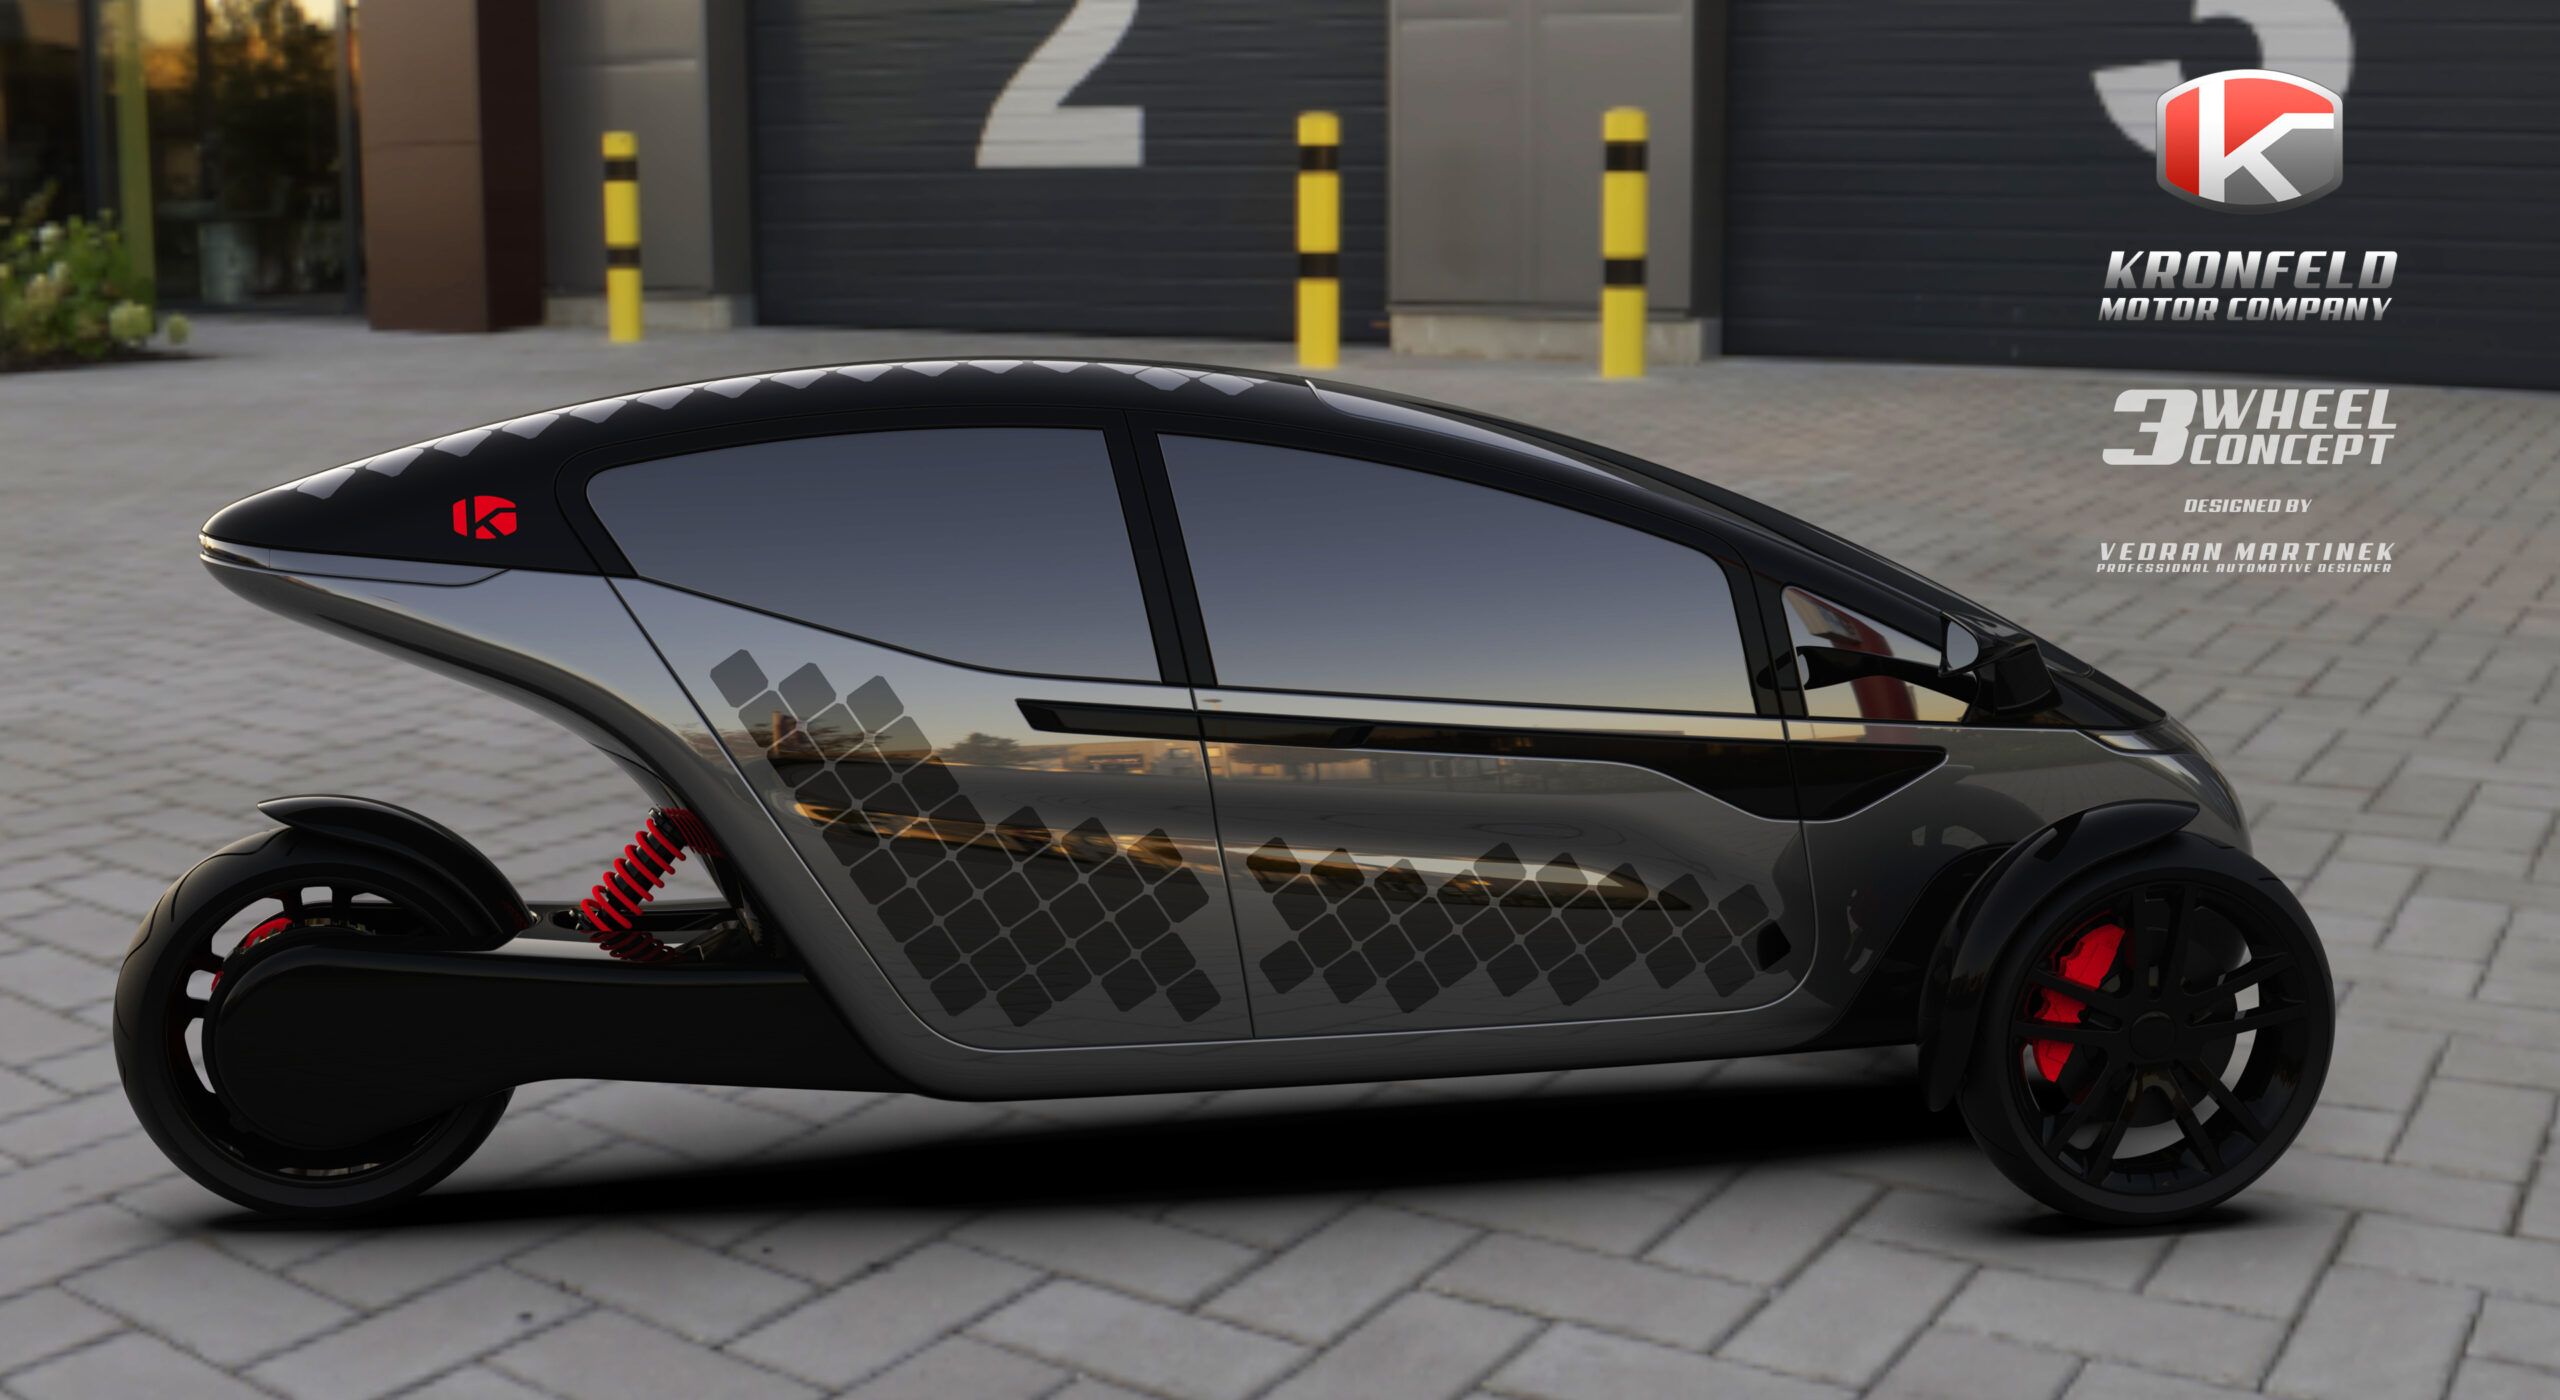 36 Kronfeld Motors 3Wheel Concept Solar Panel Body-1-scaled.jpg